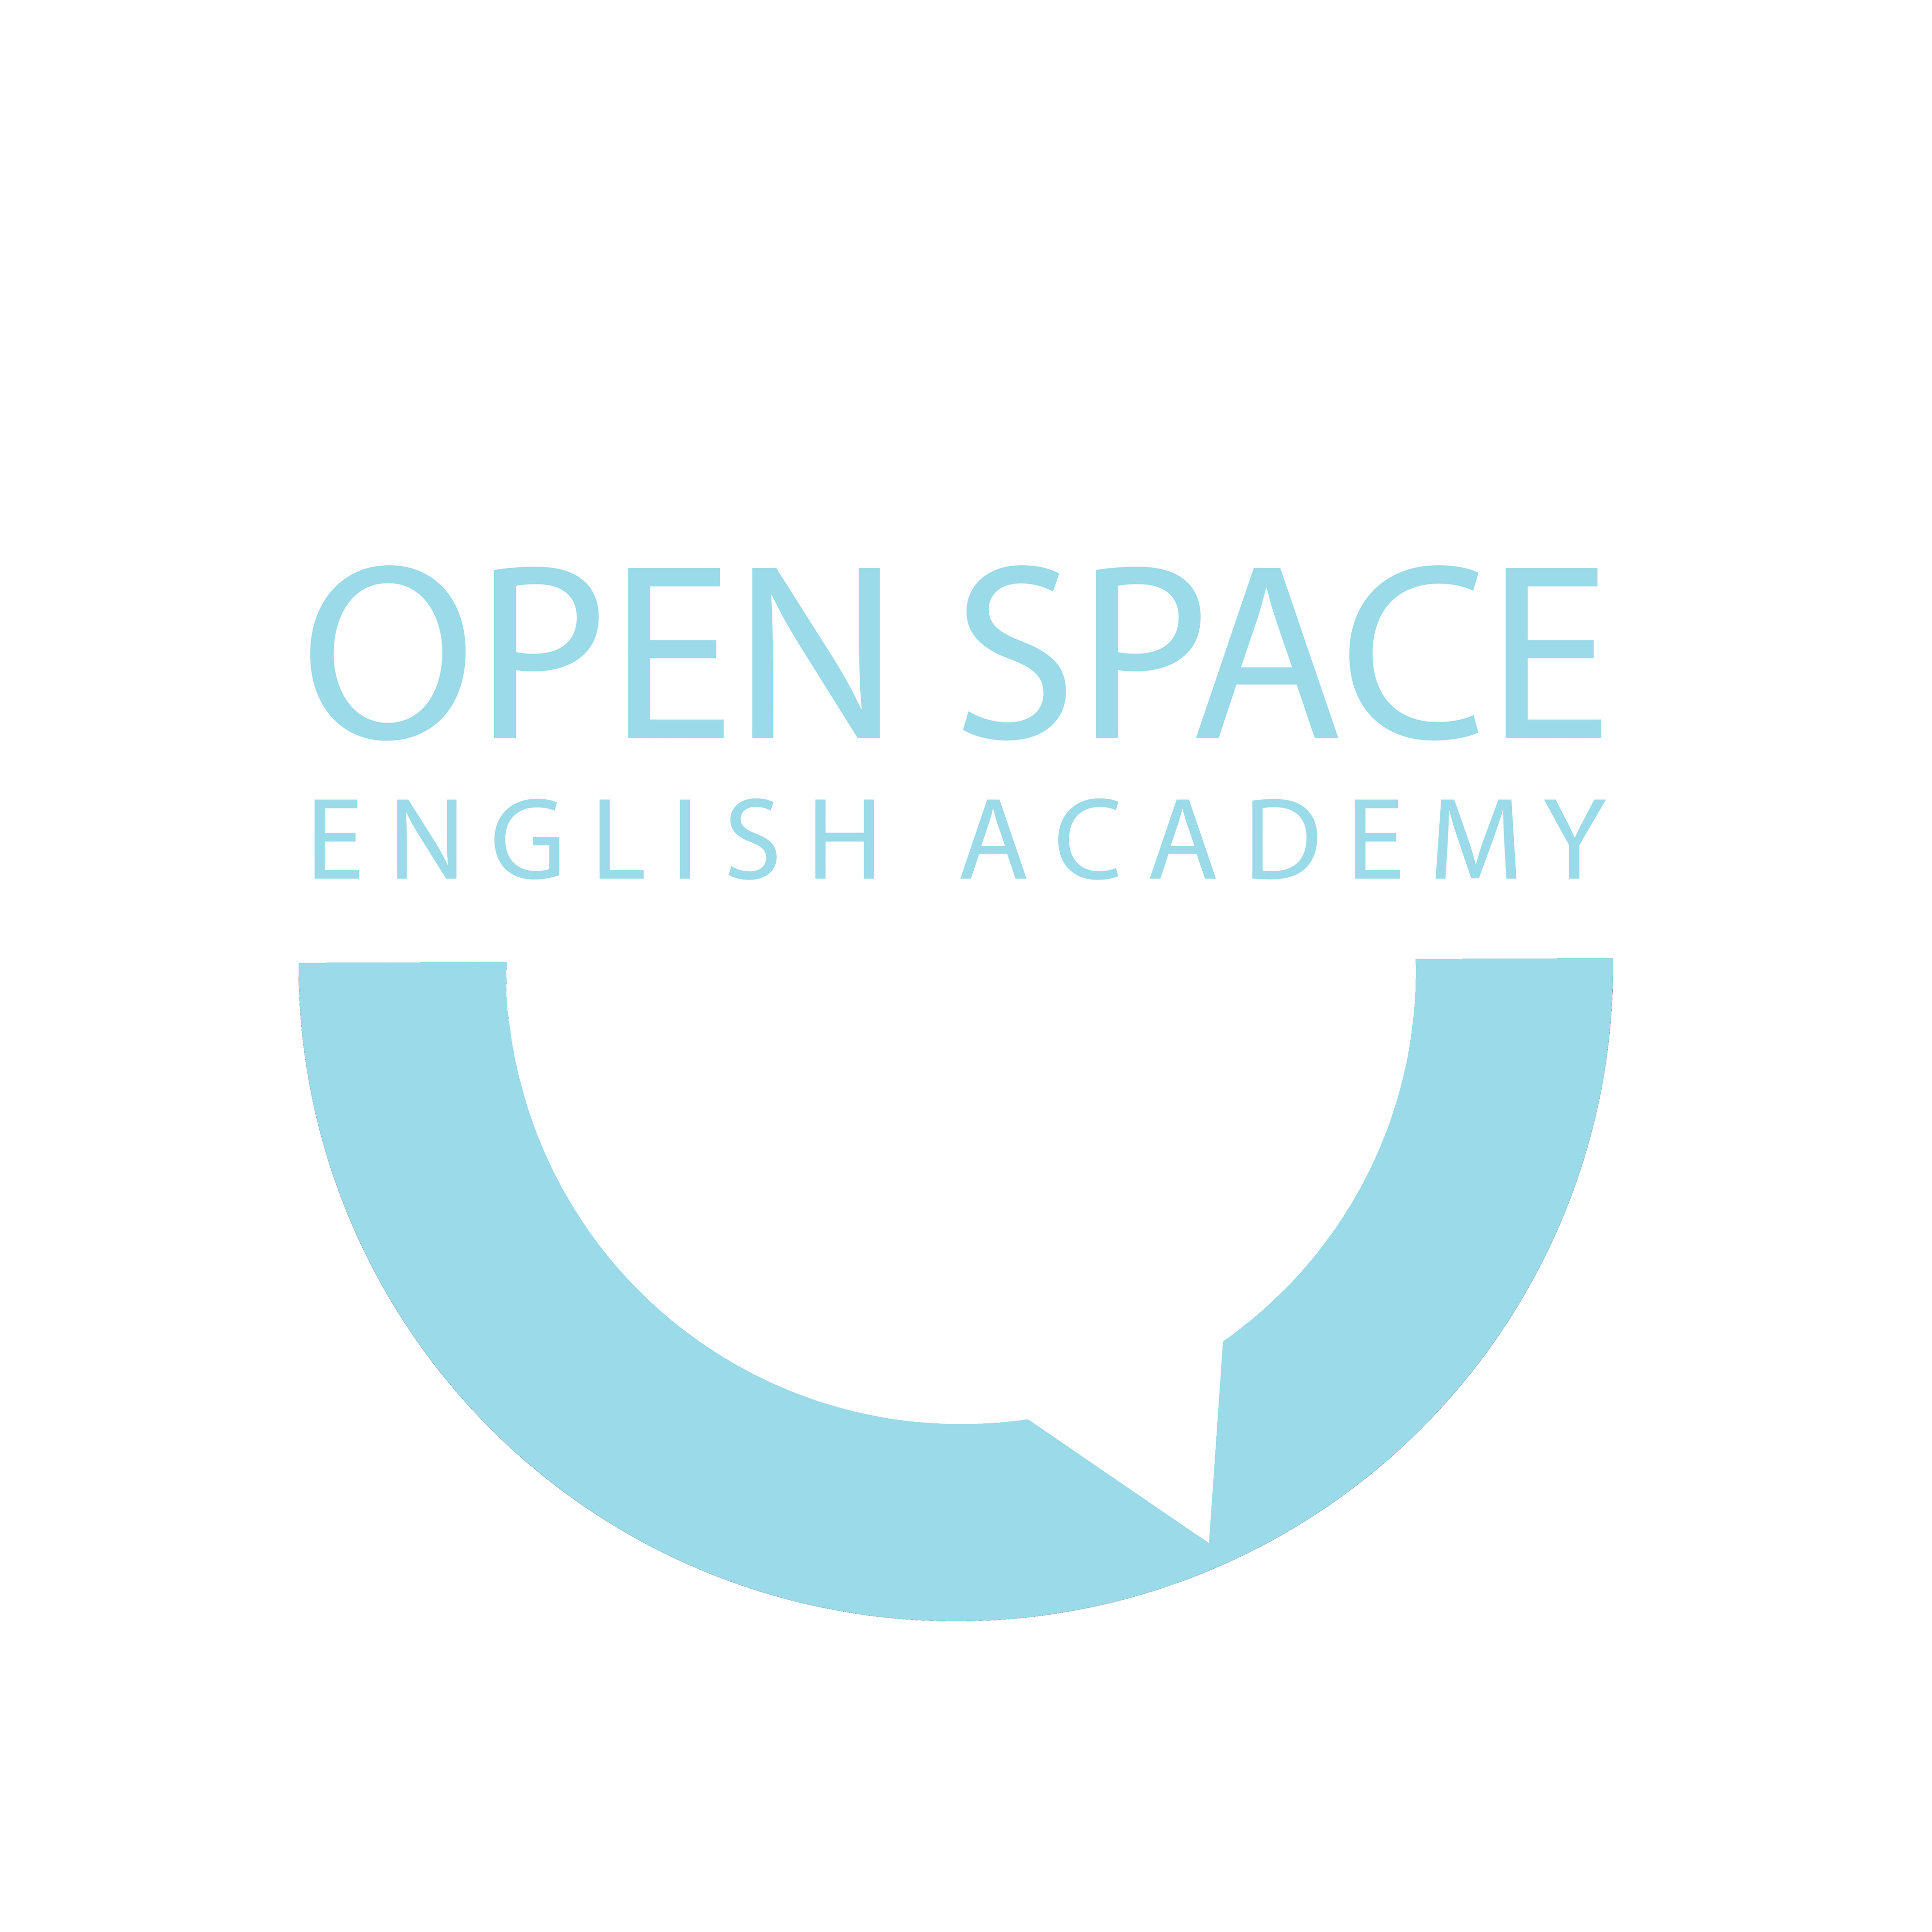 Open Space Academy